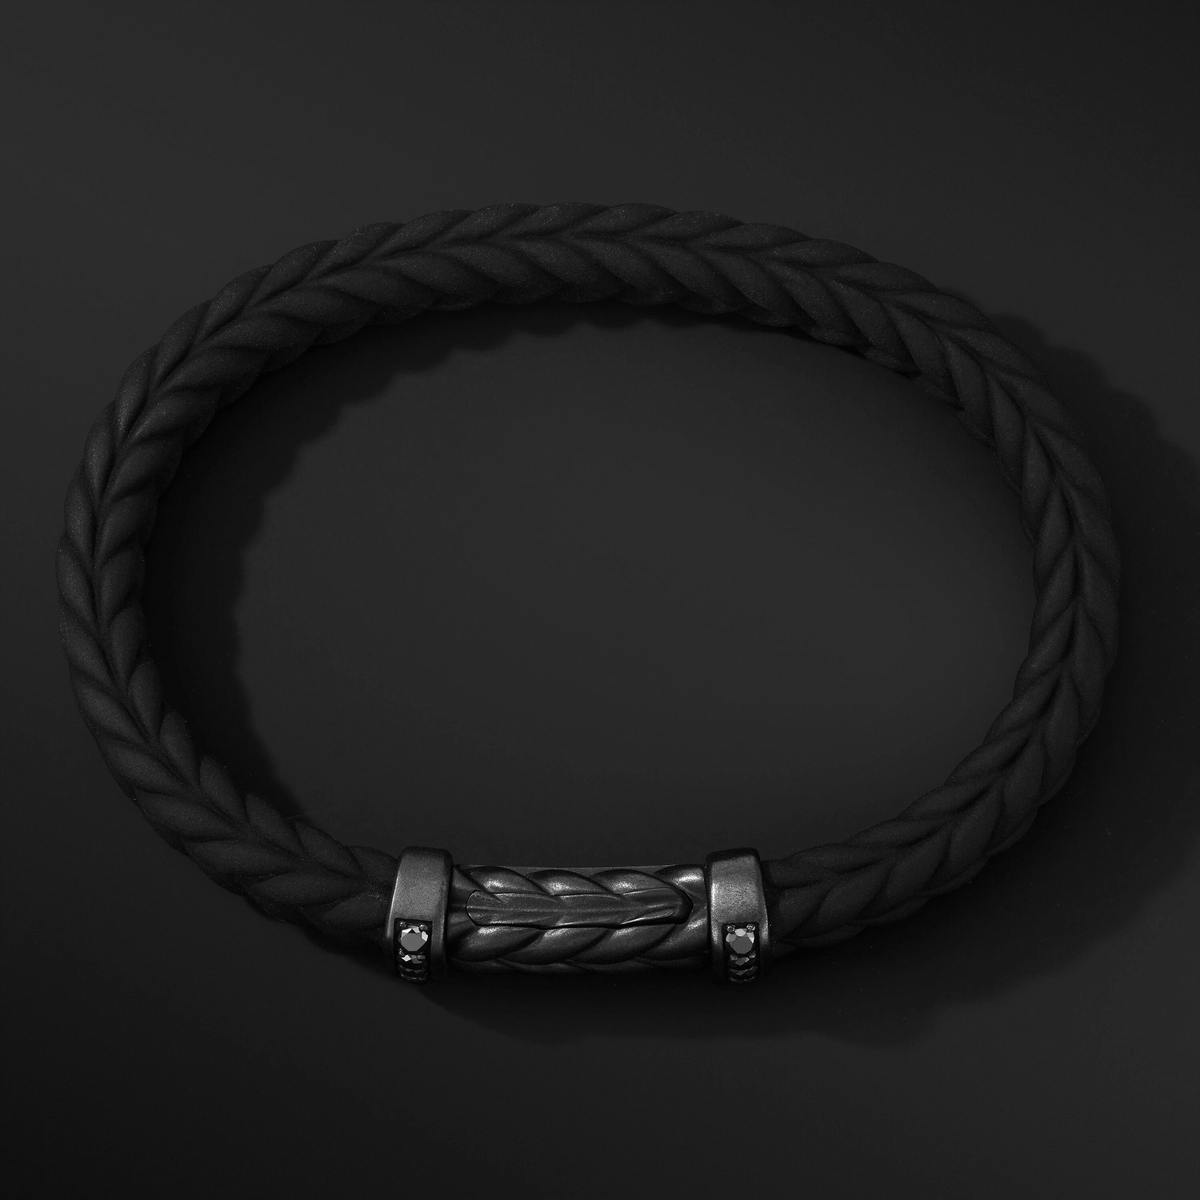 Chevron Bracelet in Black Rubber with Black Titanium and Black Diamonds, 9mm